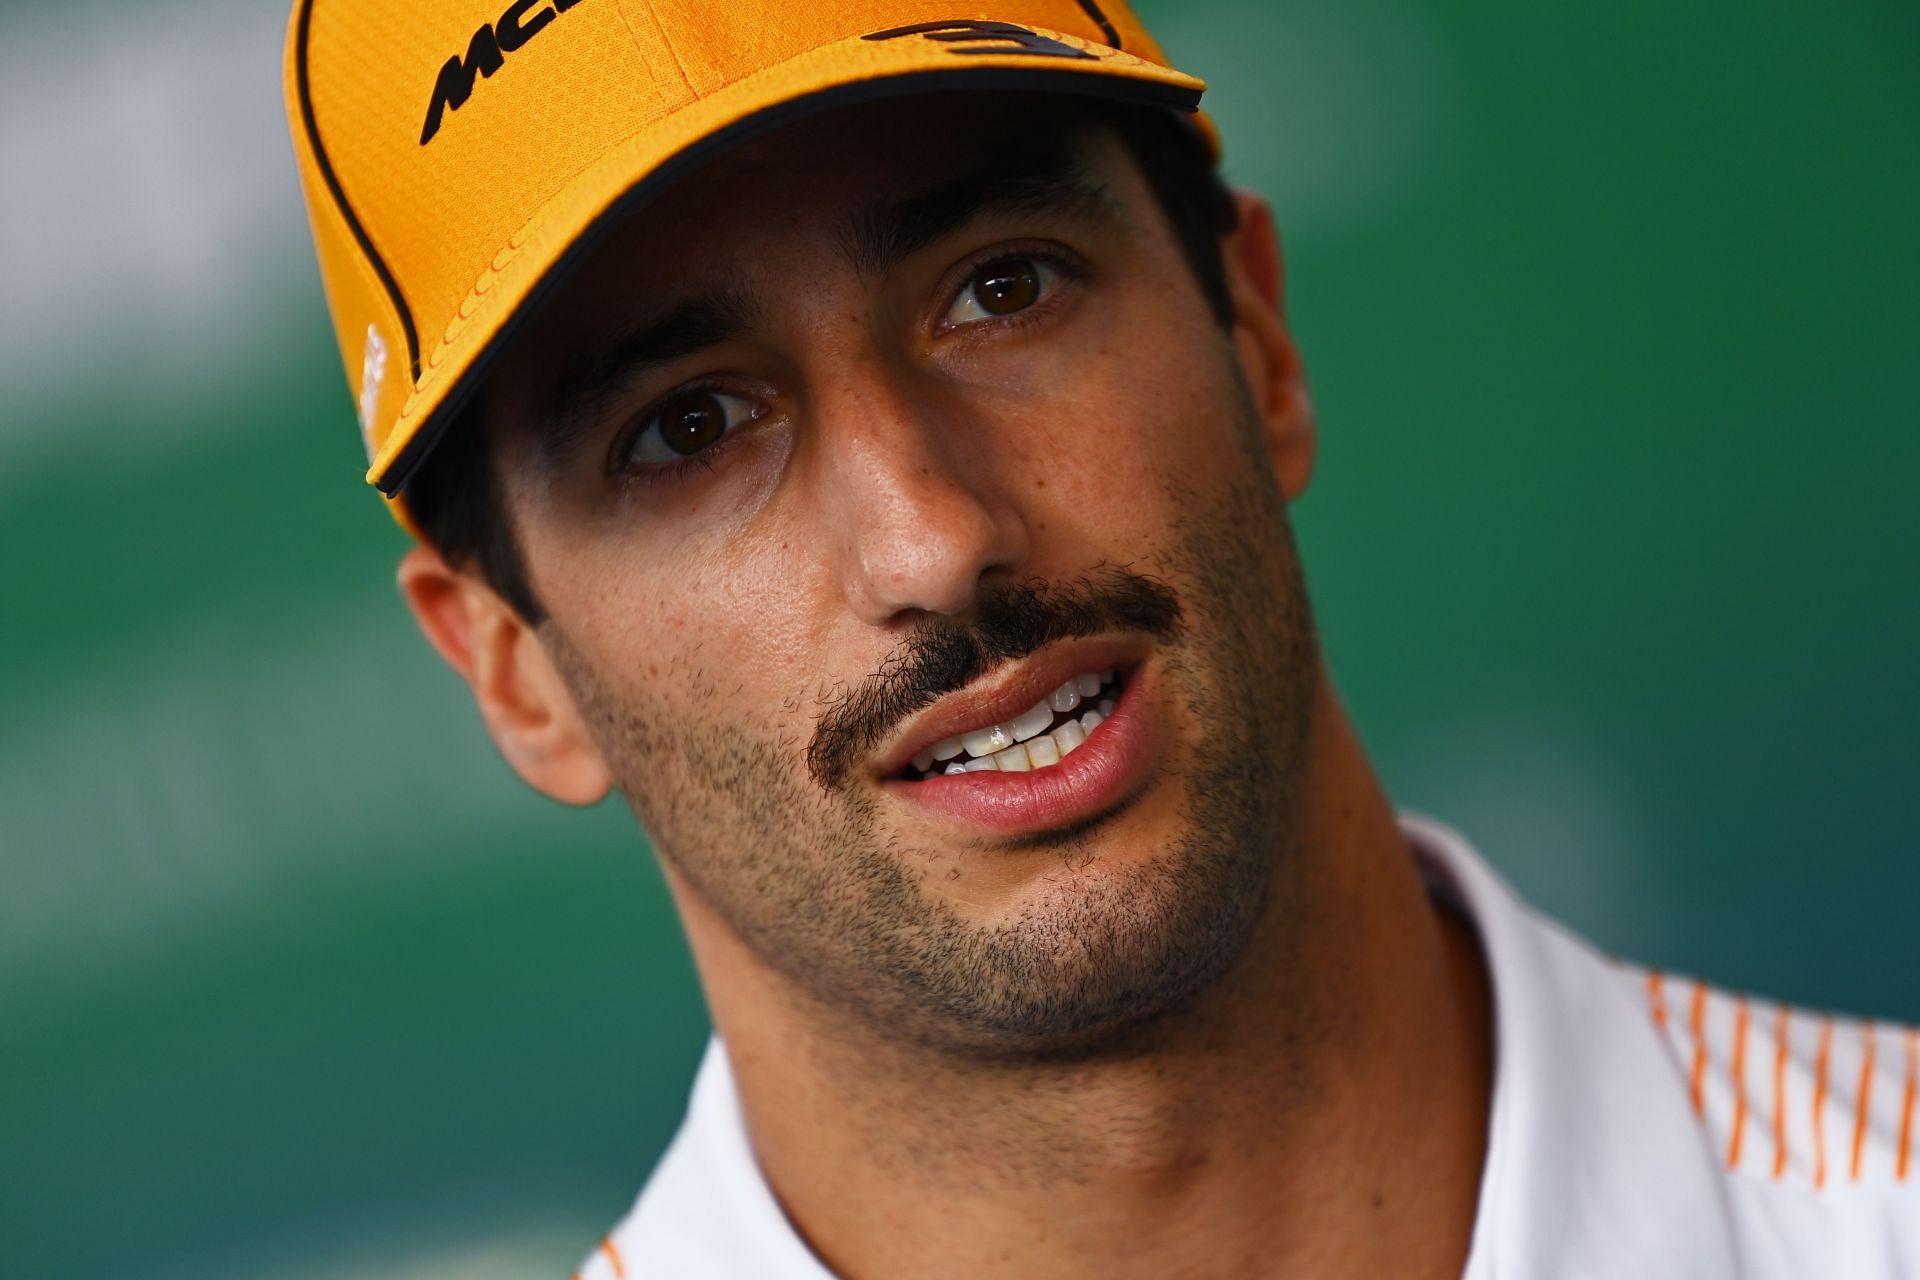 Daniel Ricciardo in the paddock ahead of the Qatar Grand Prix. (Photo by Clive Mason/Getty Images)